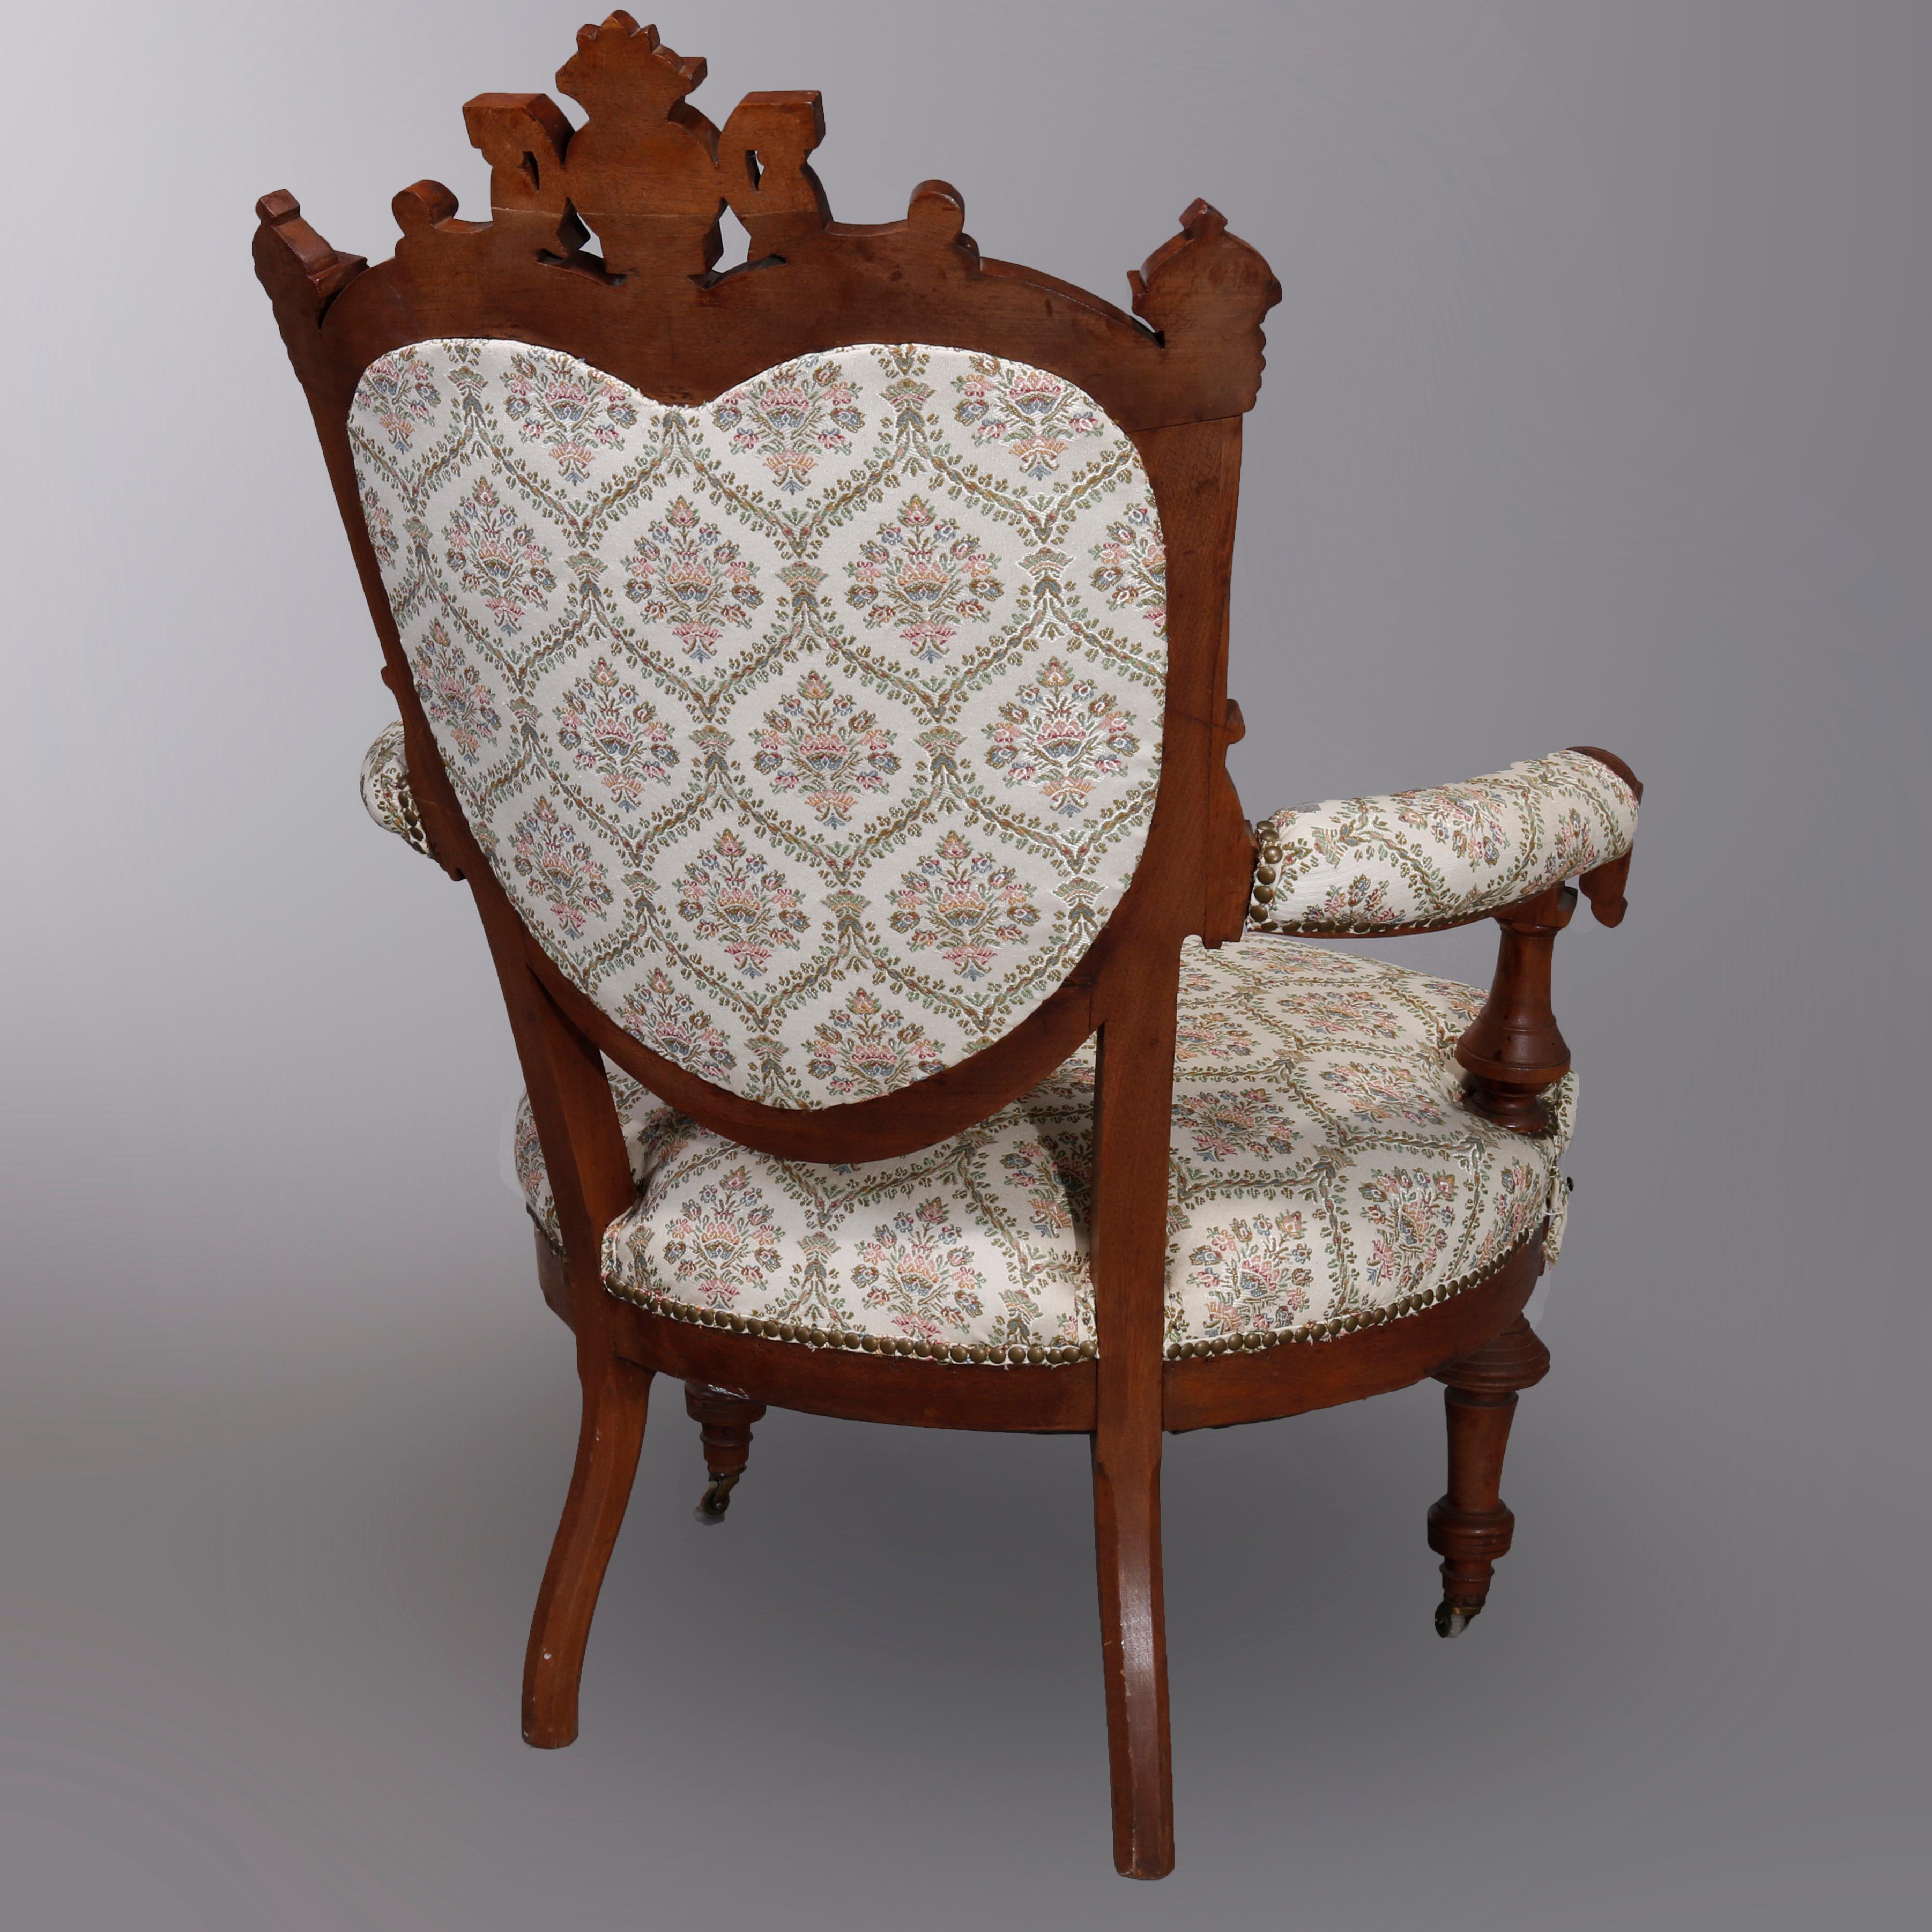 Antique Renaissance Revival Walnut & Burl Parlor Armchairs with Marquetry, c1880 For Sale 5